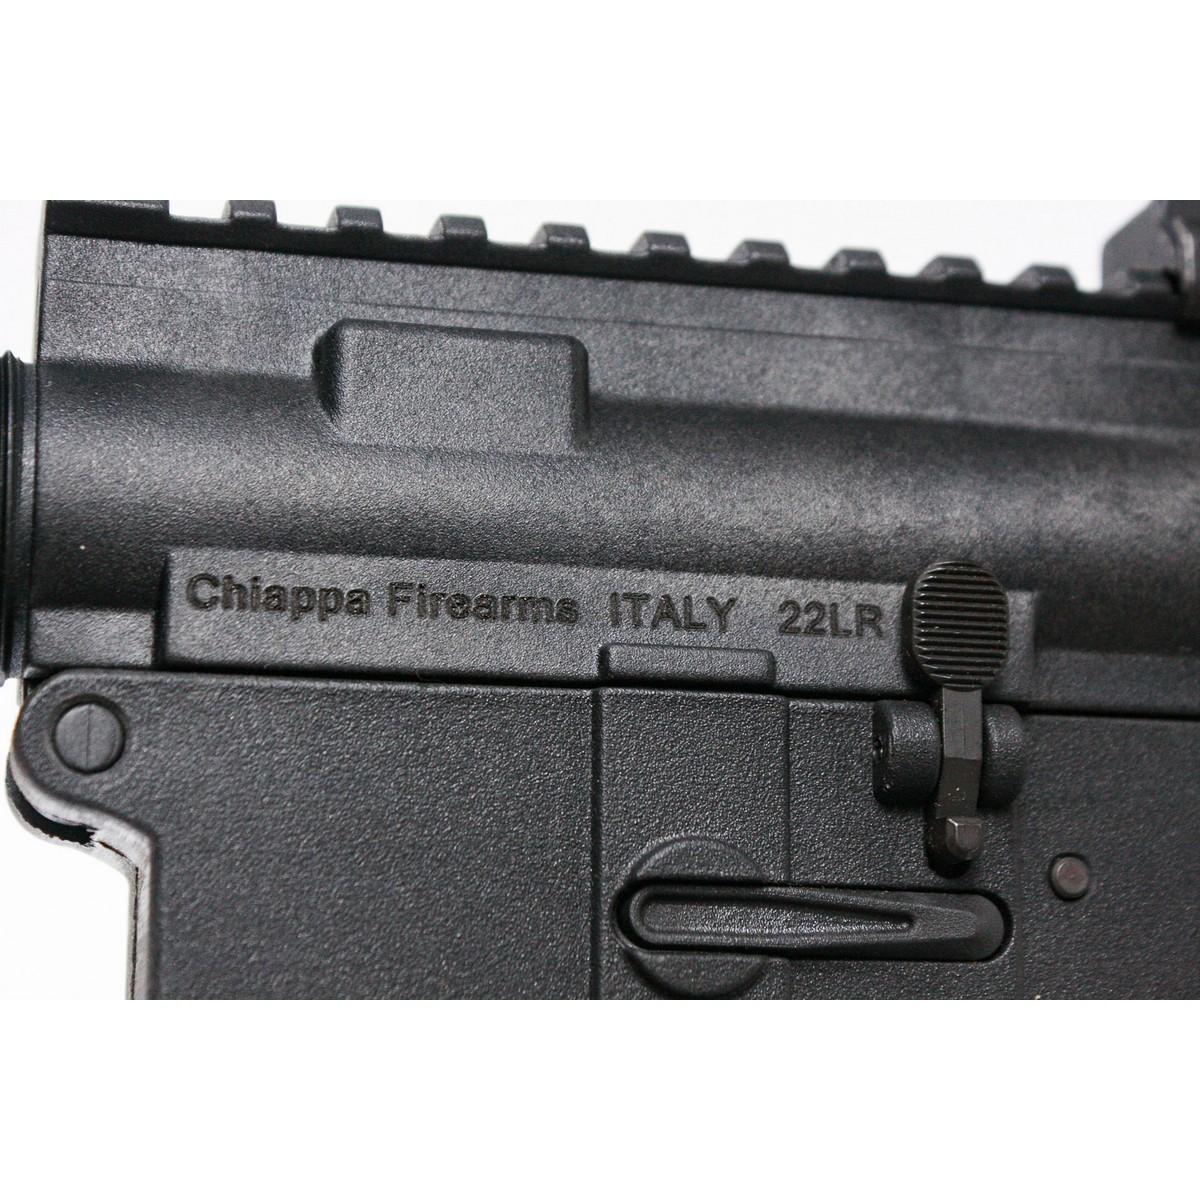 Chiappa Arms AR-15 Rifle .22 LR (M)